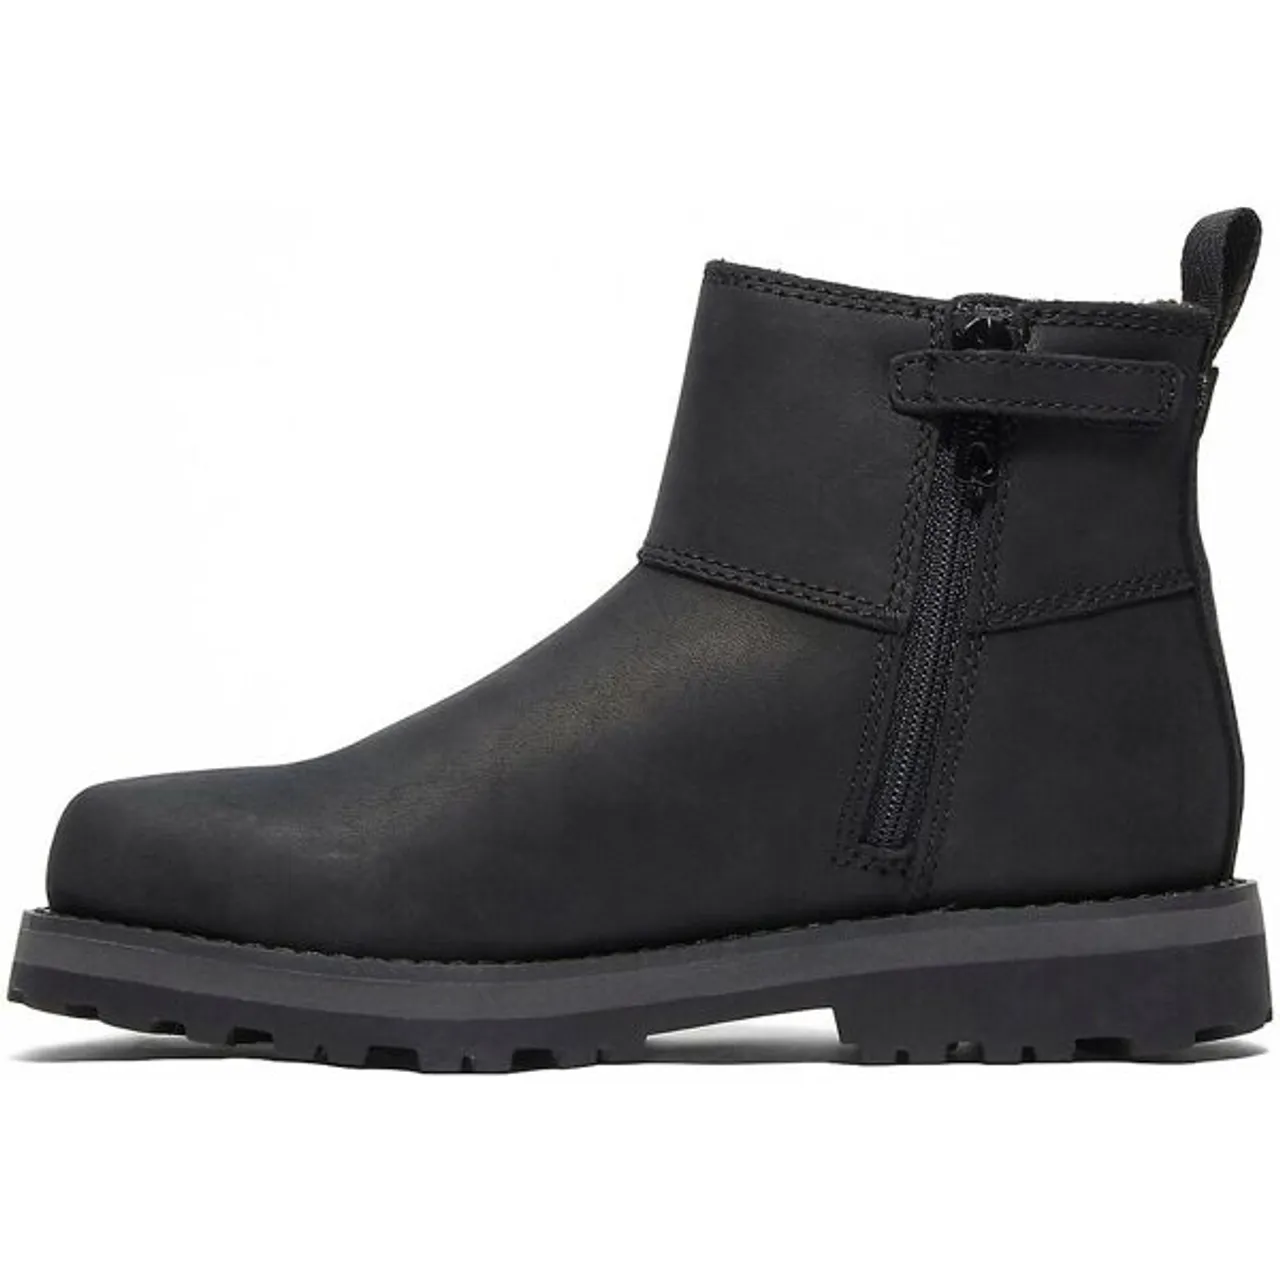 Chelseaboots TIMBERLAND "Courma Kid Chelsea" Gr. 36, schwarz (black) Damen Schuhe Stiefel Boots